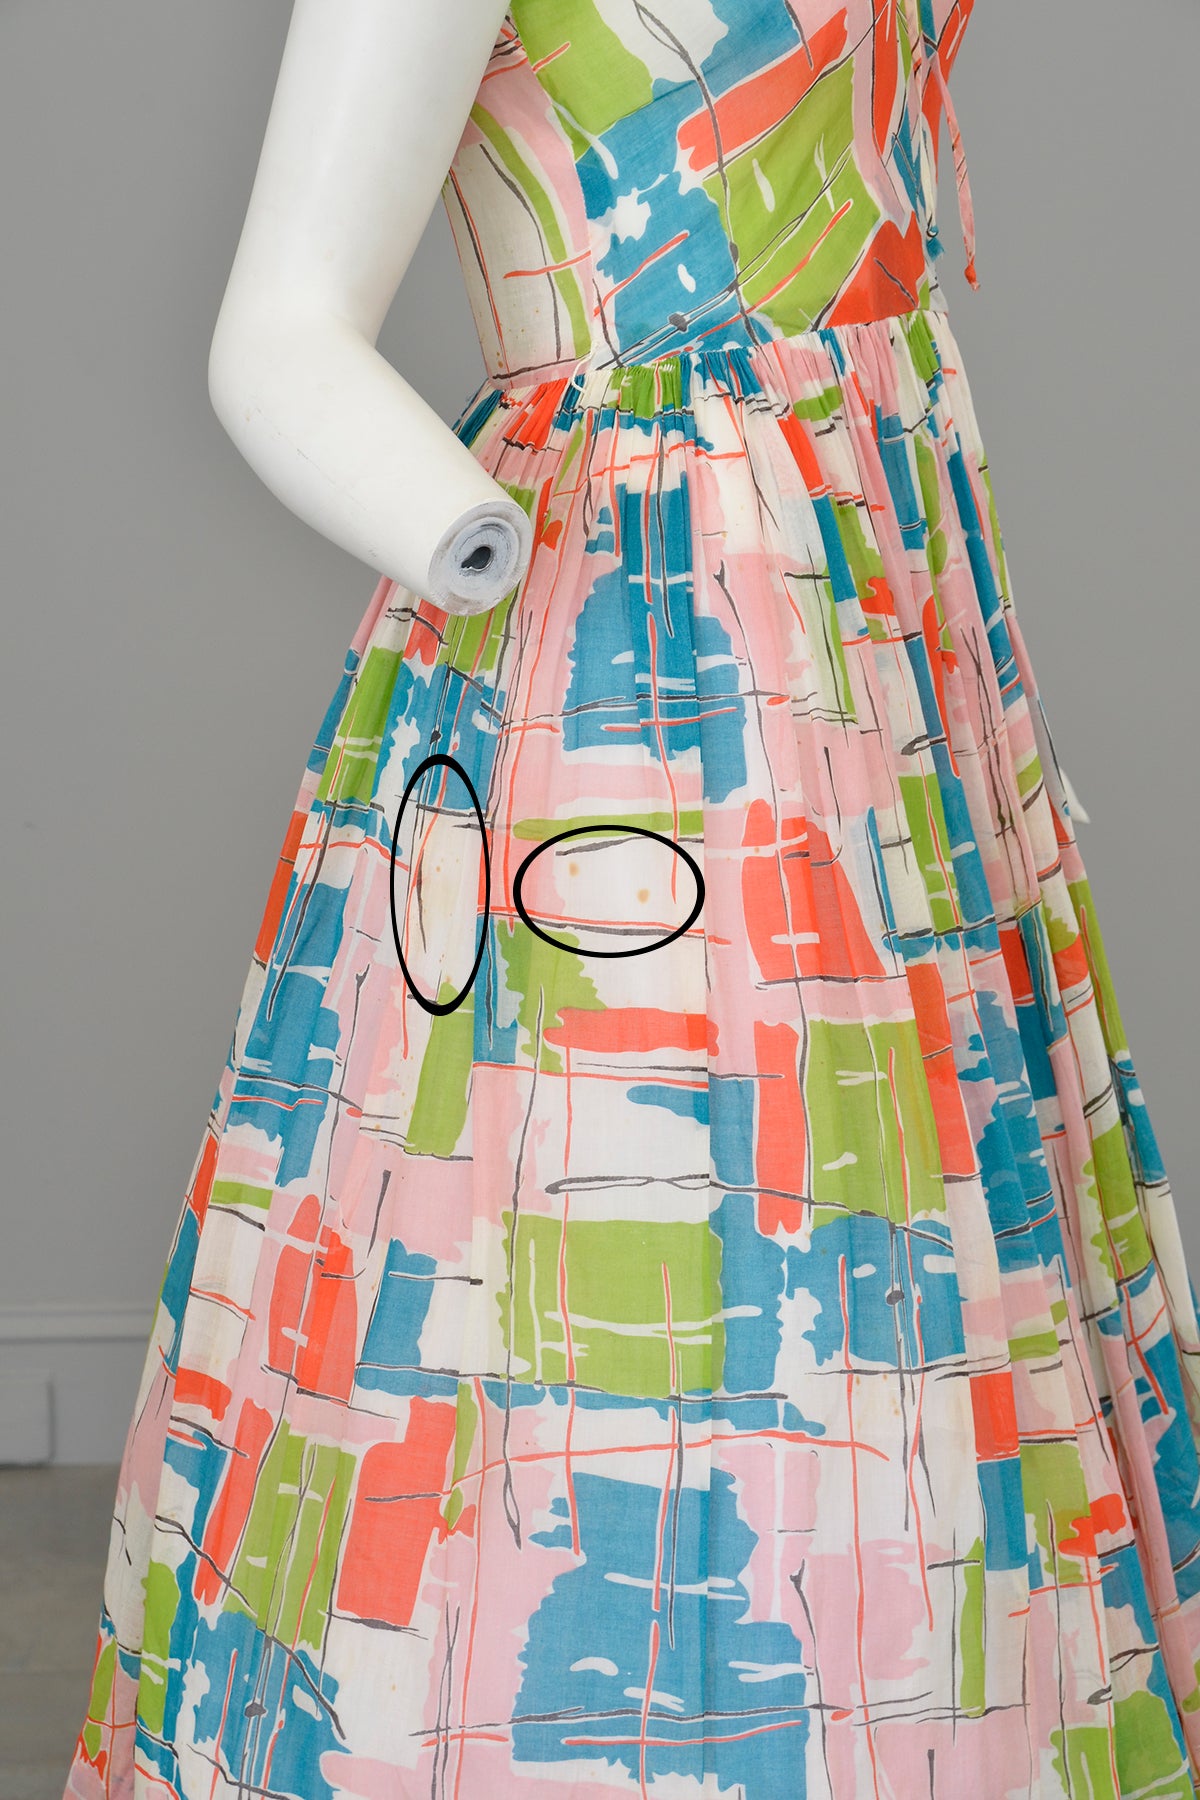 1940s 50s Contemporary Art Print Dress - Restoration piece, needs good cleaning